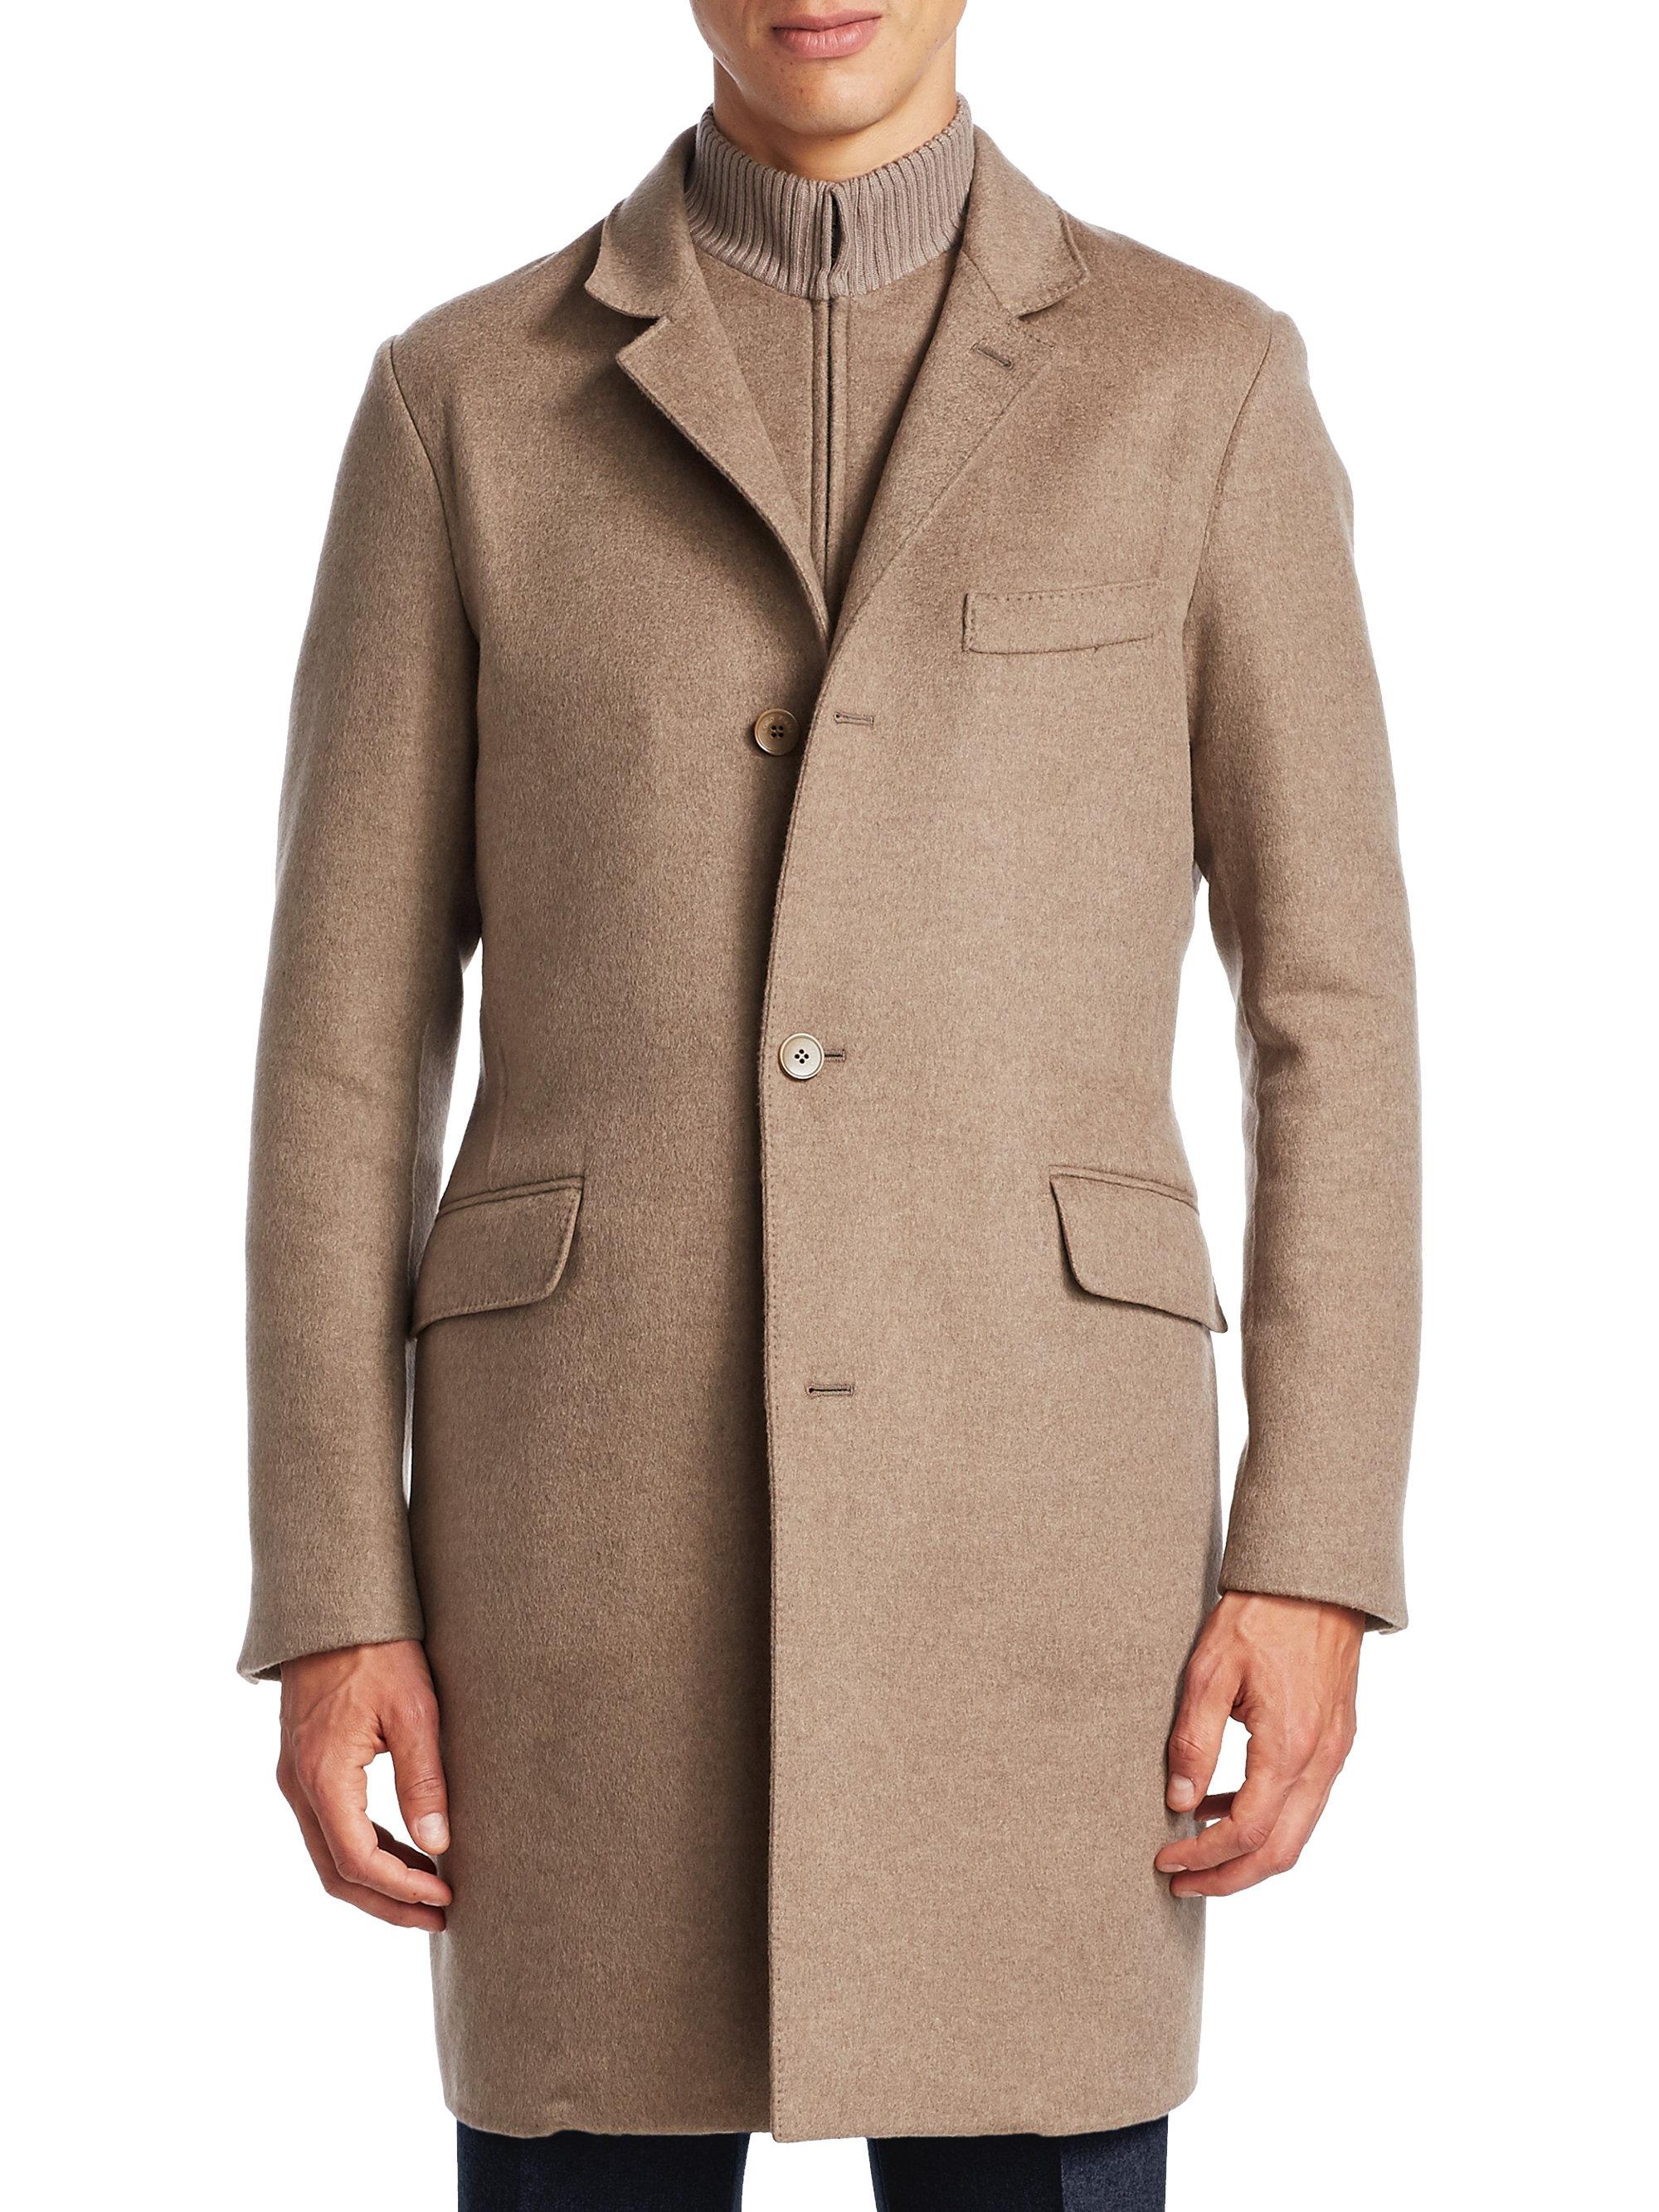 Loro Piana Martingala Cashmere Long Coat in Brown for Men - Lyst